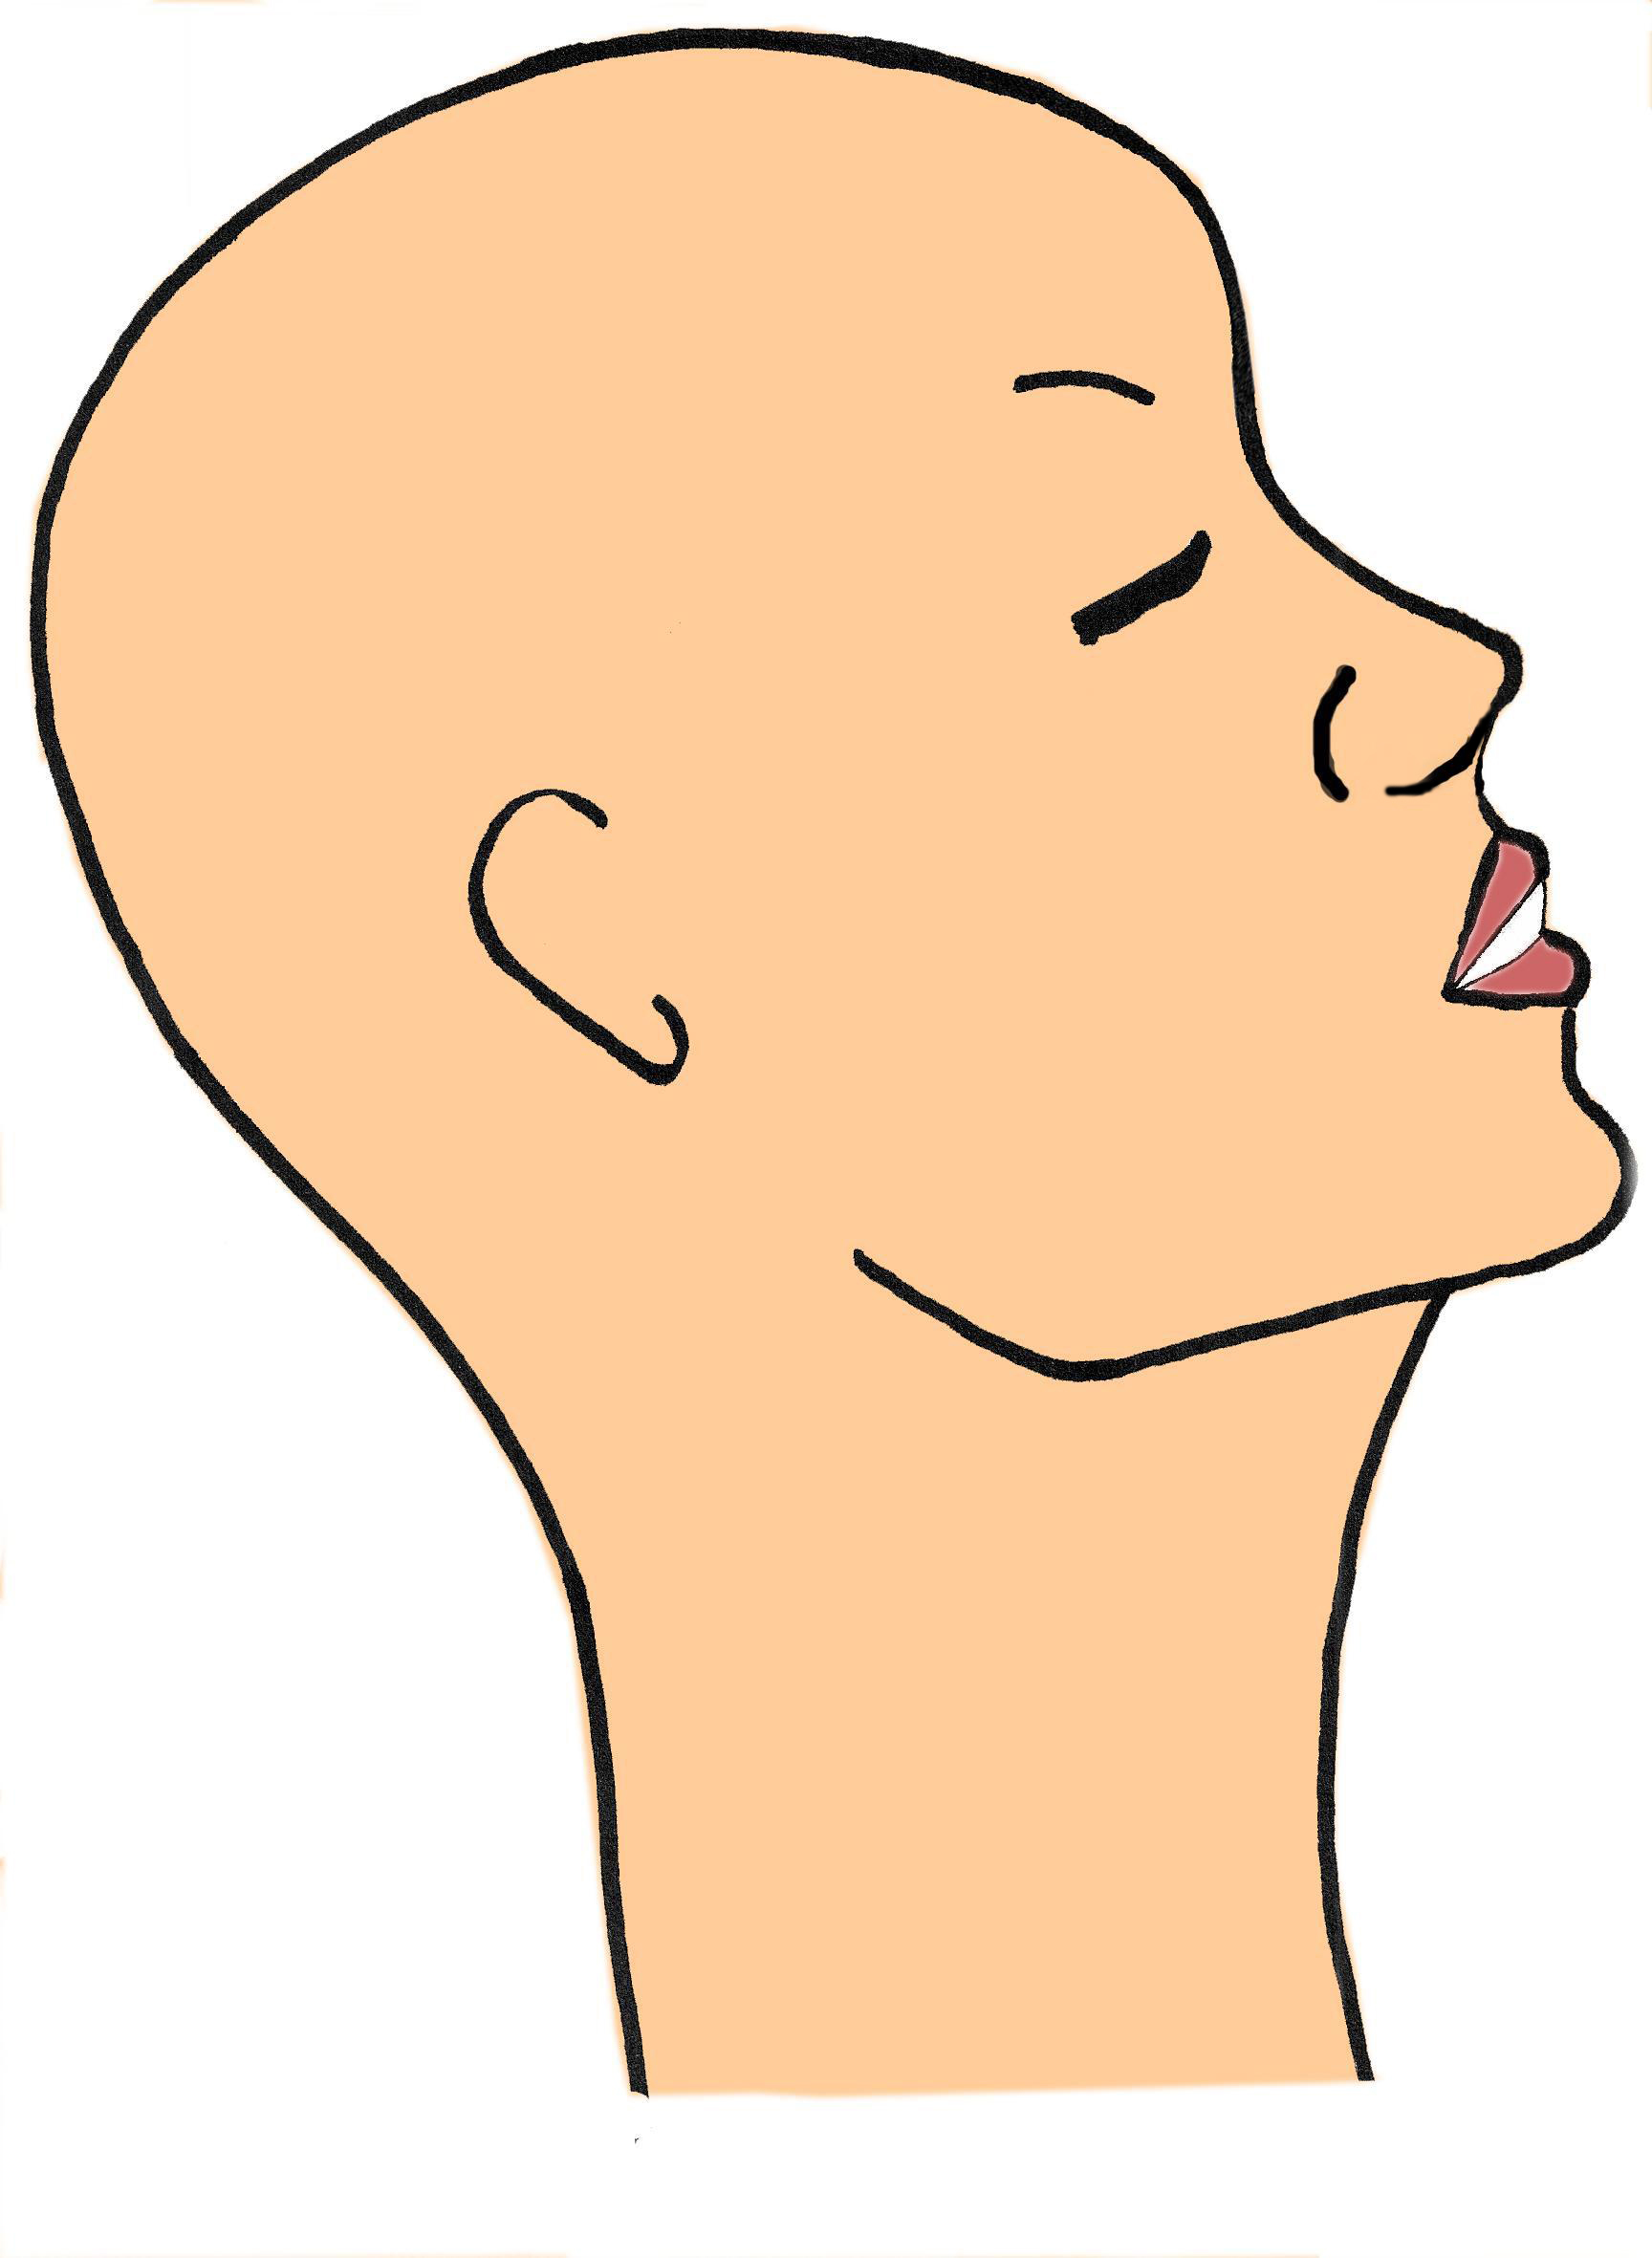 narine-pendante-rhinoplastie-chirurgie-esthetique-nez